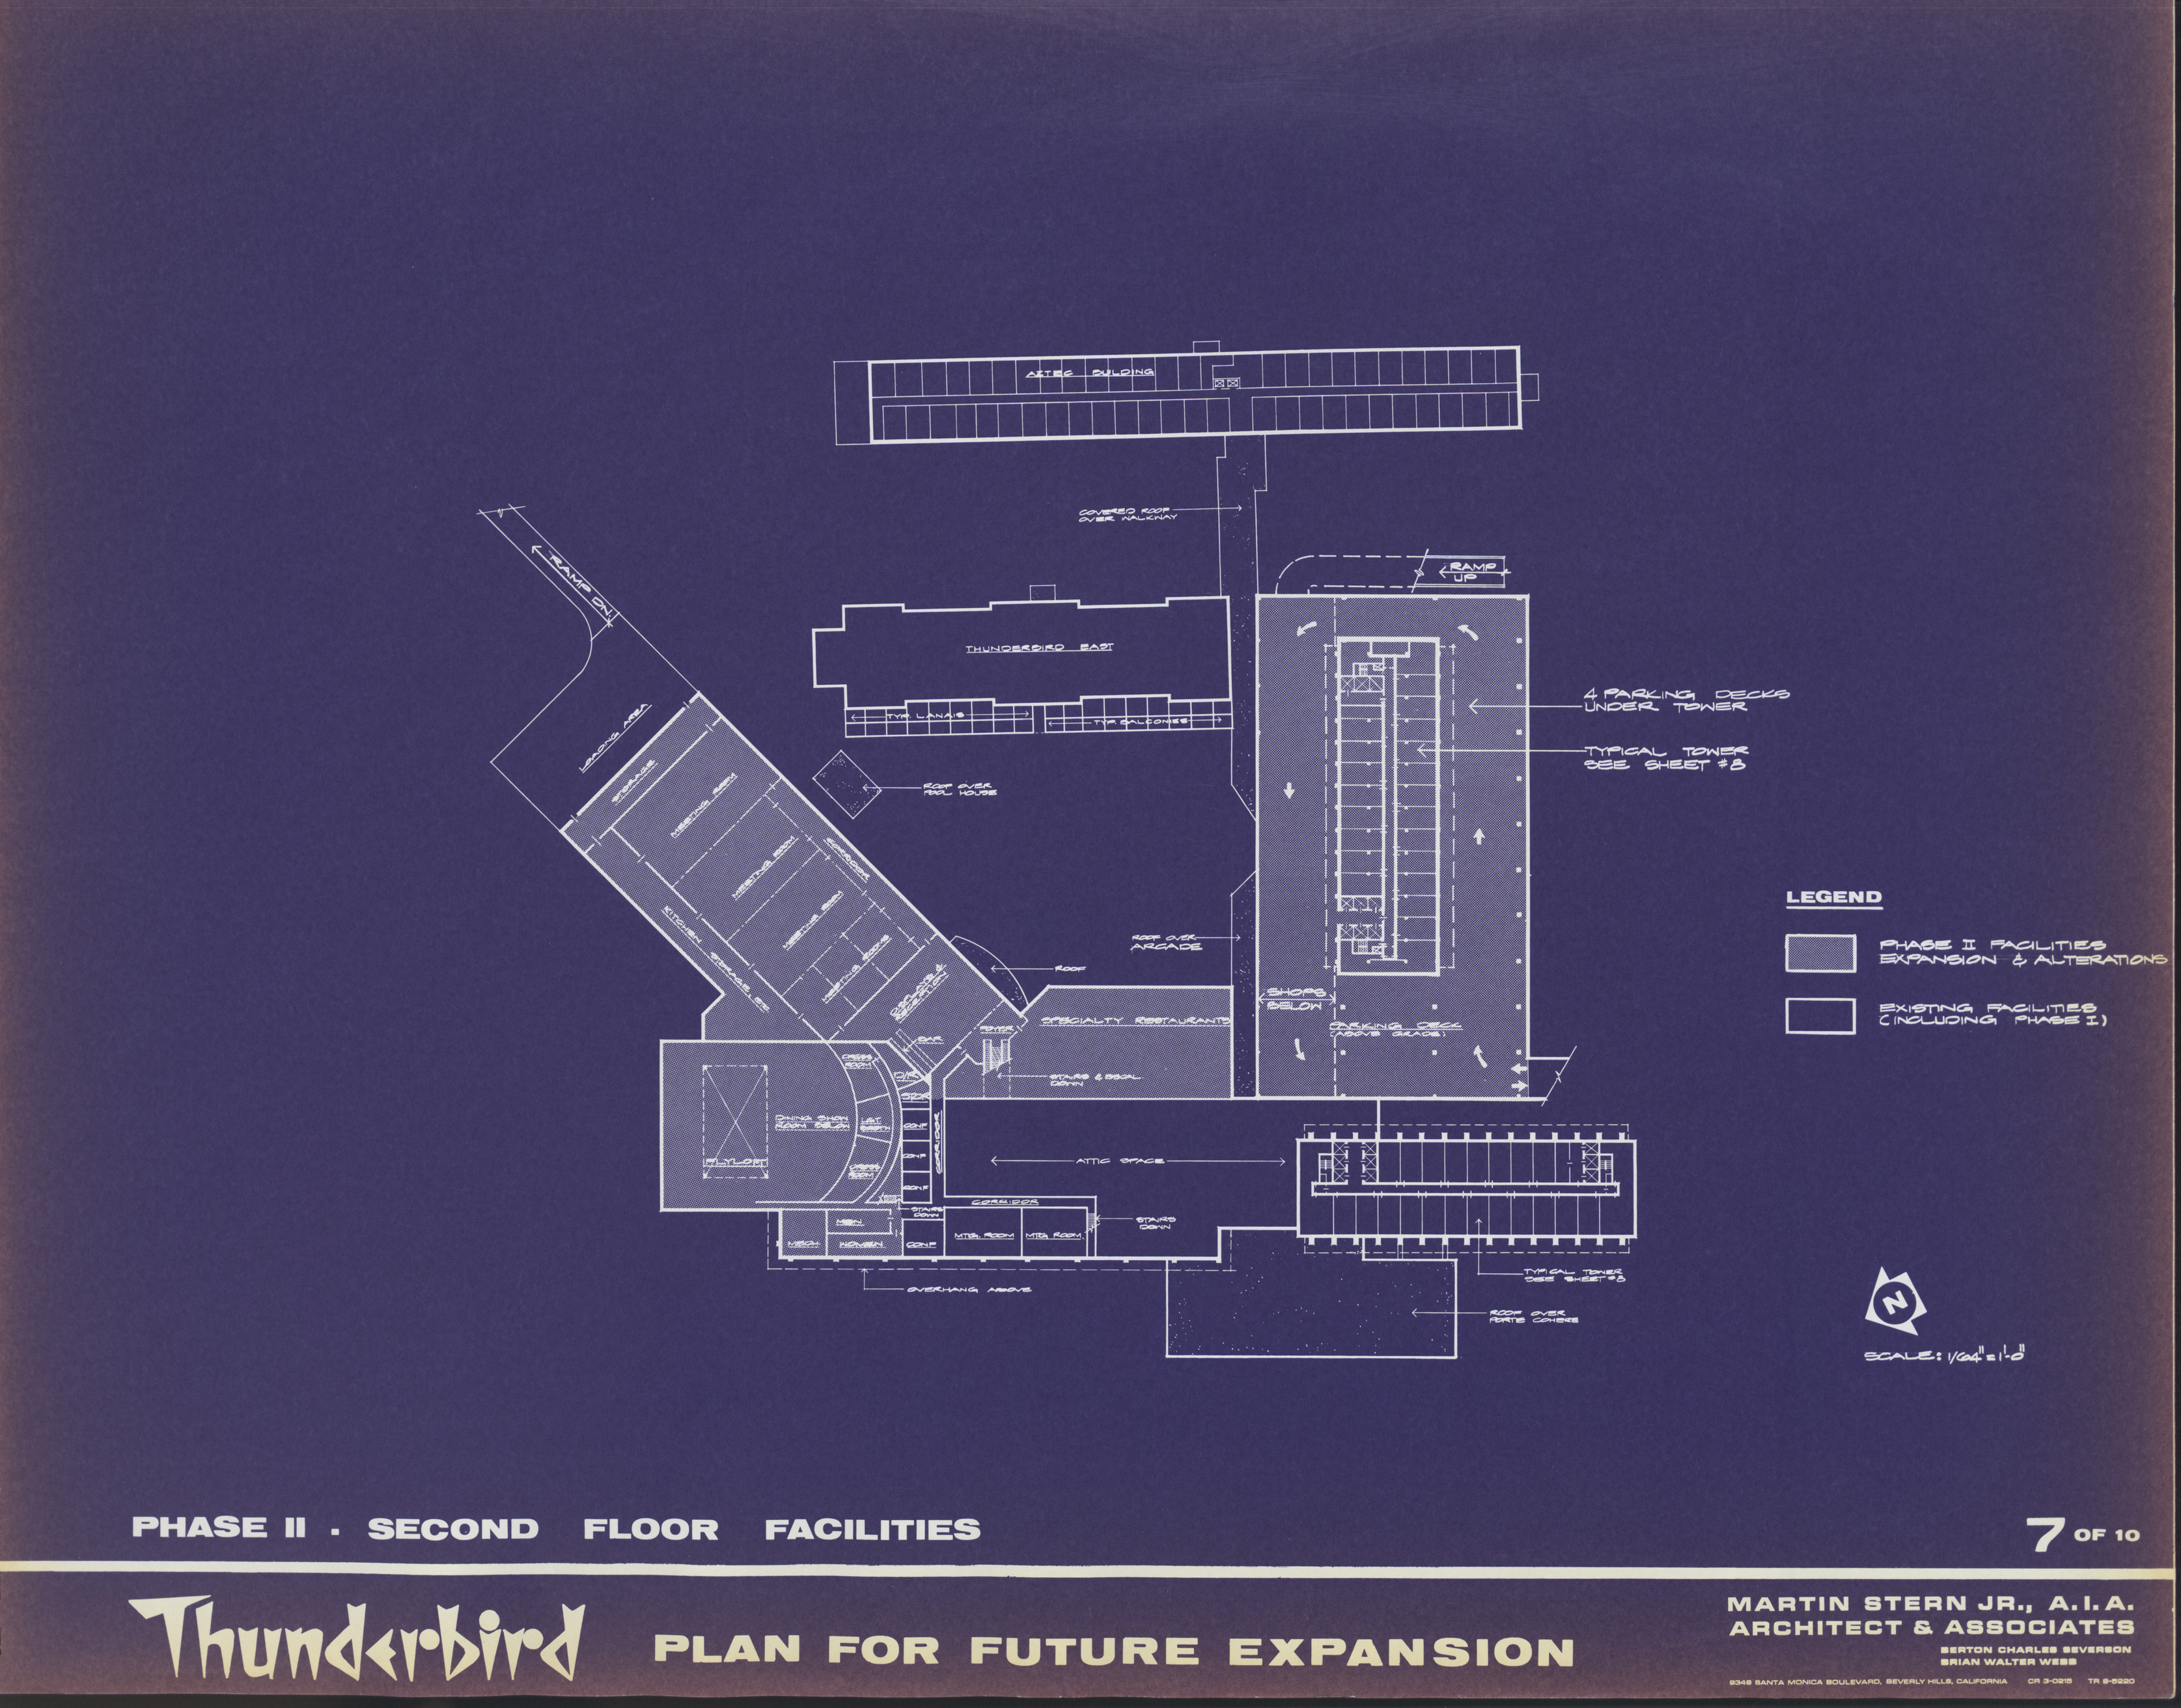 Thunderbird Plan for Future Expansion Proposal, image 7